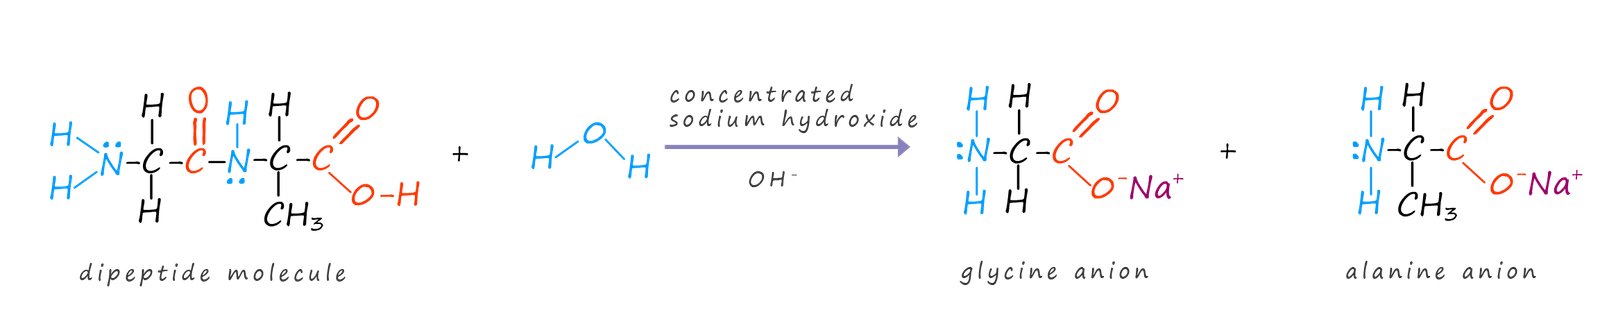 Alkaline hydrolysis of a dipeptide molecule using sodium hydroxide solution